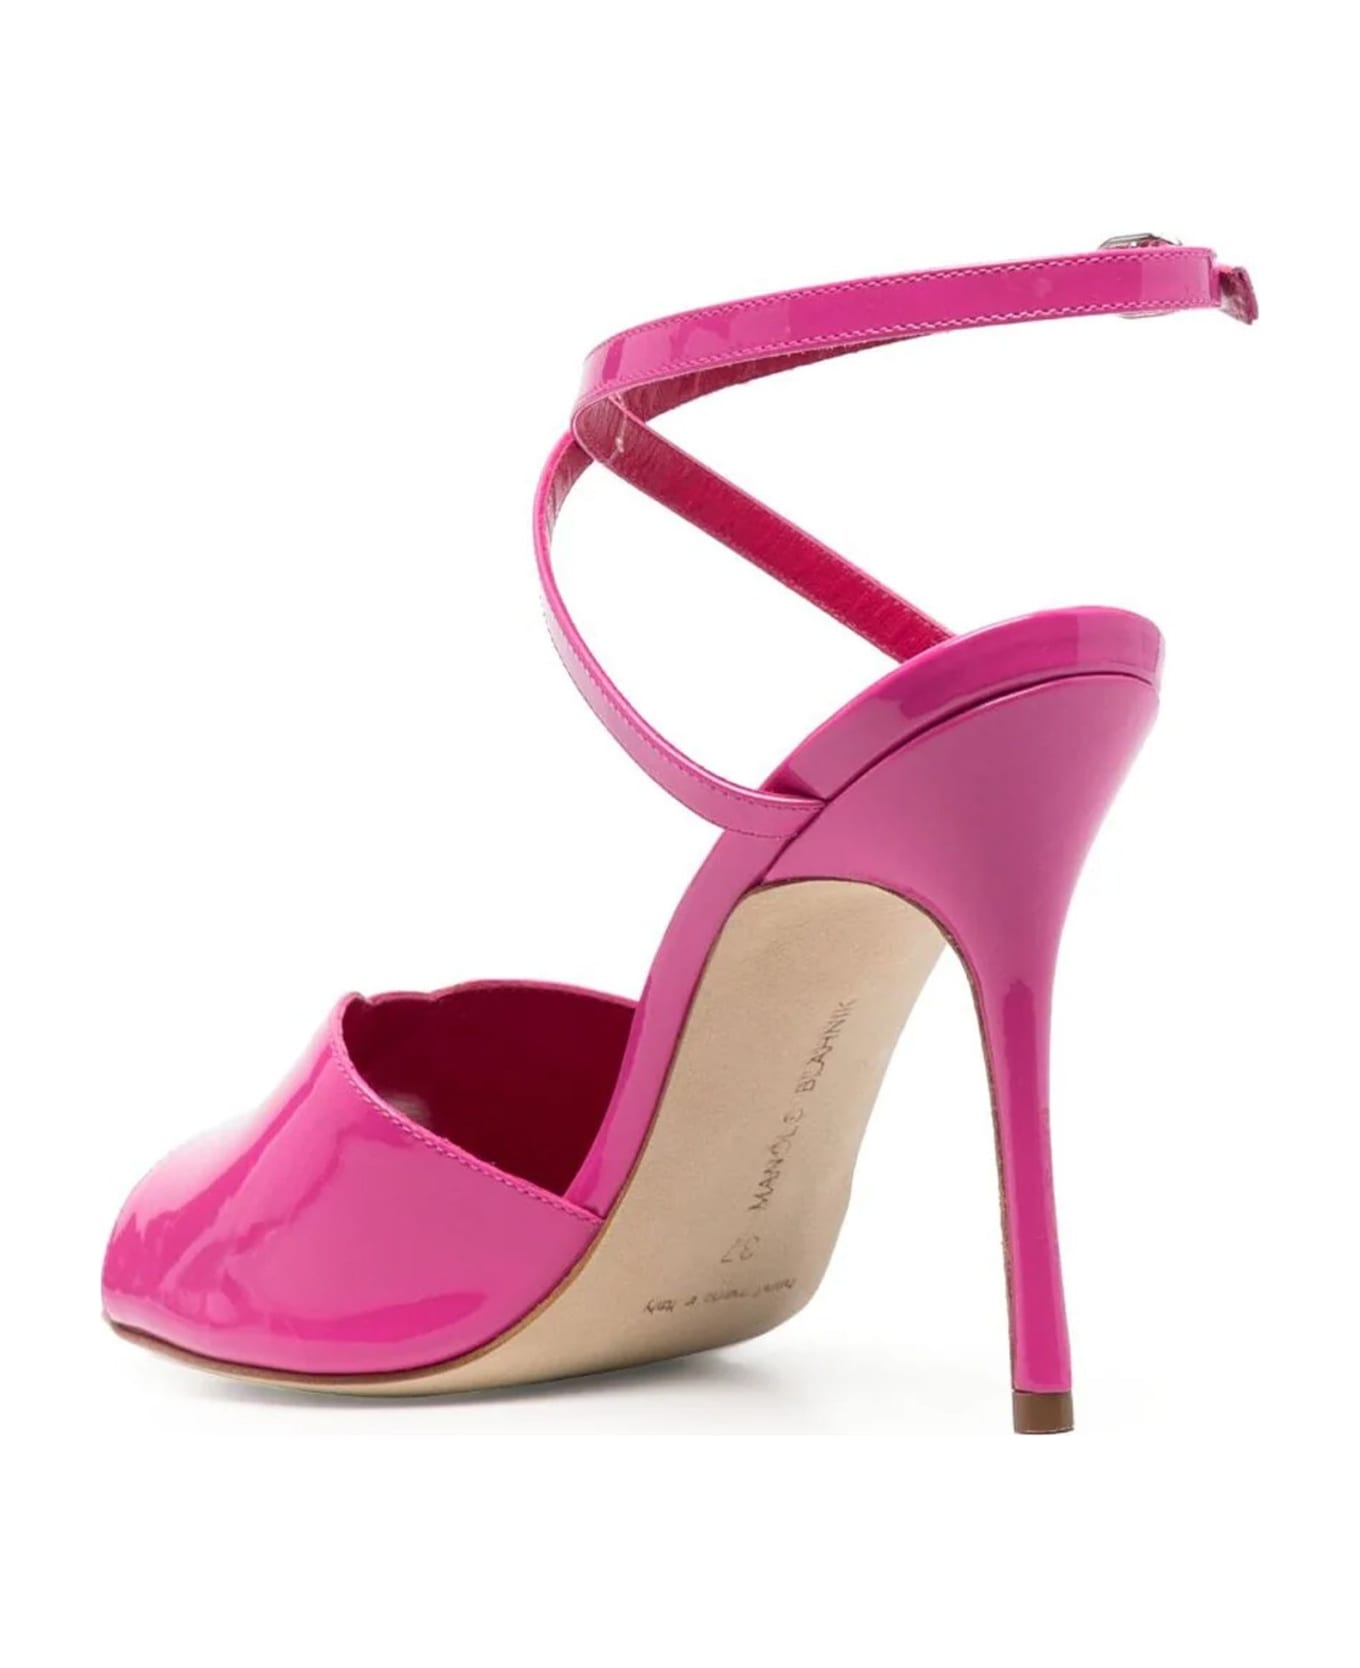 Manolo Blahnik Hourani 105 Sandals - Pink